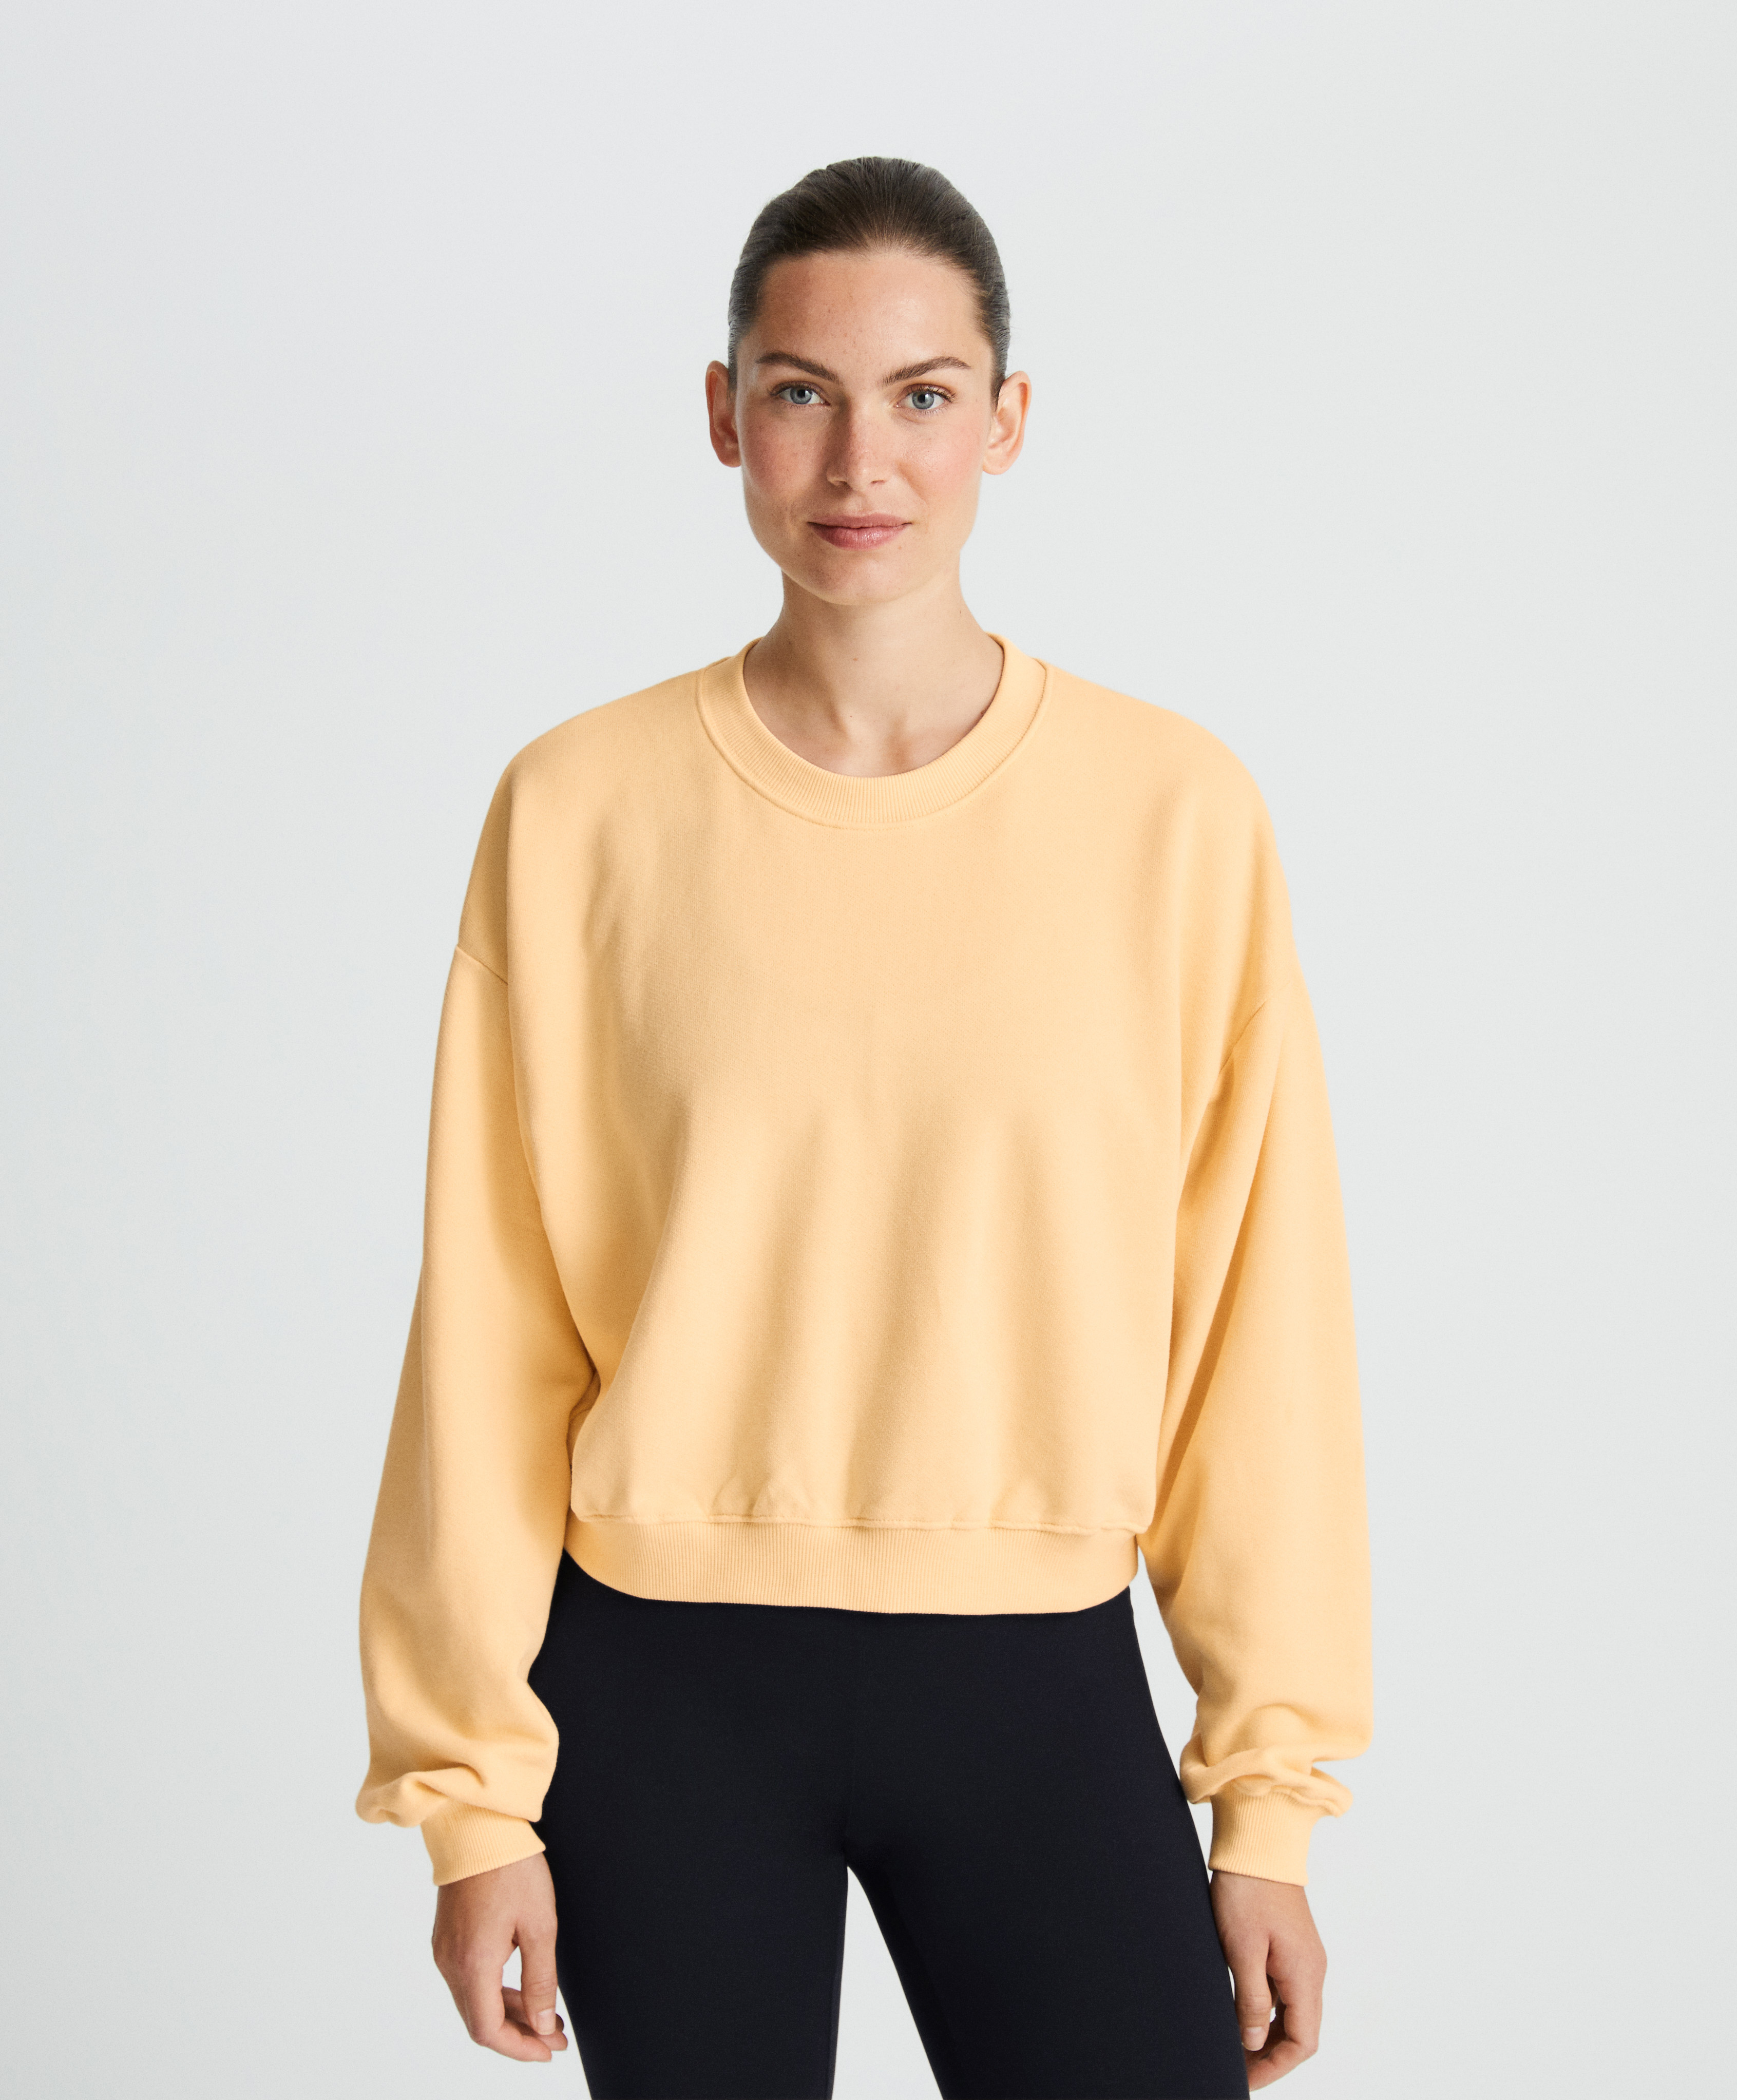 Plush 100% cotton sweatshirt